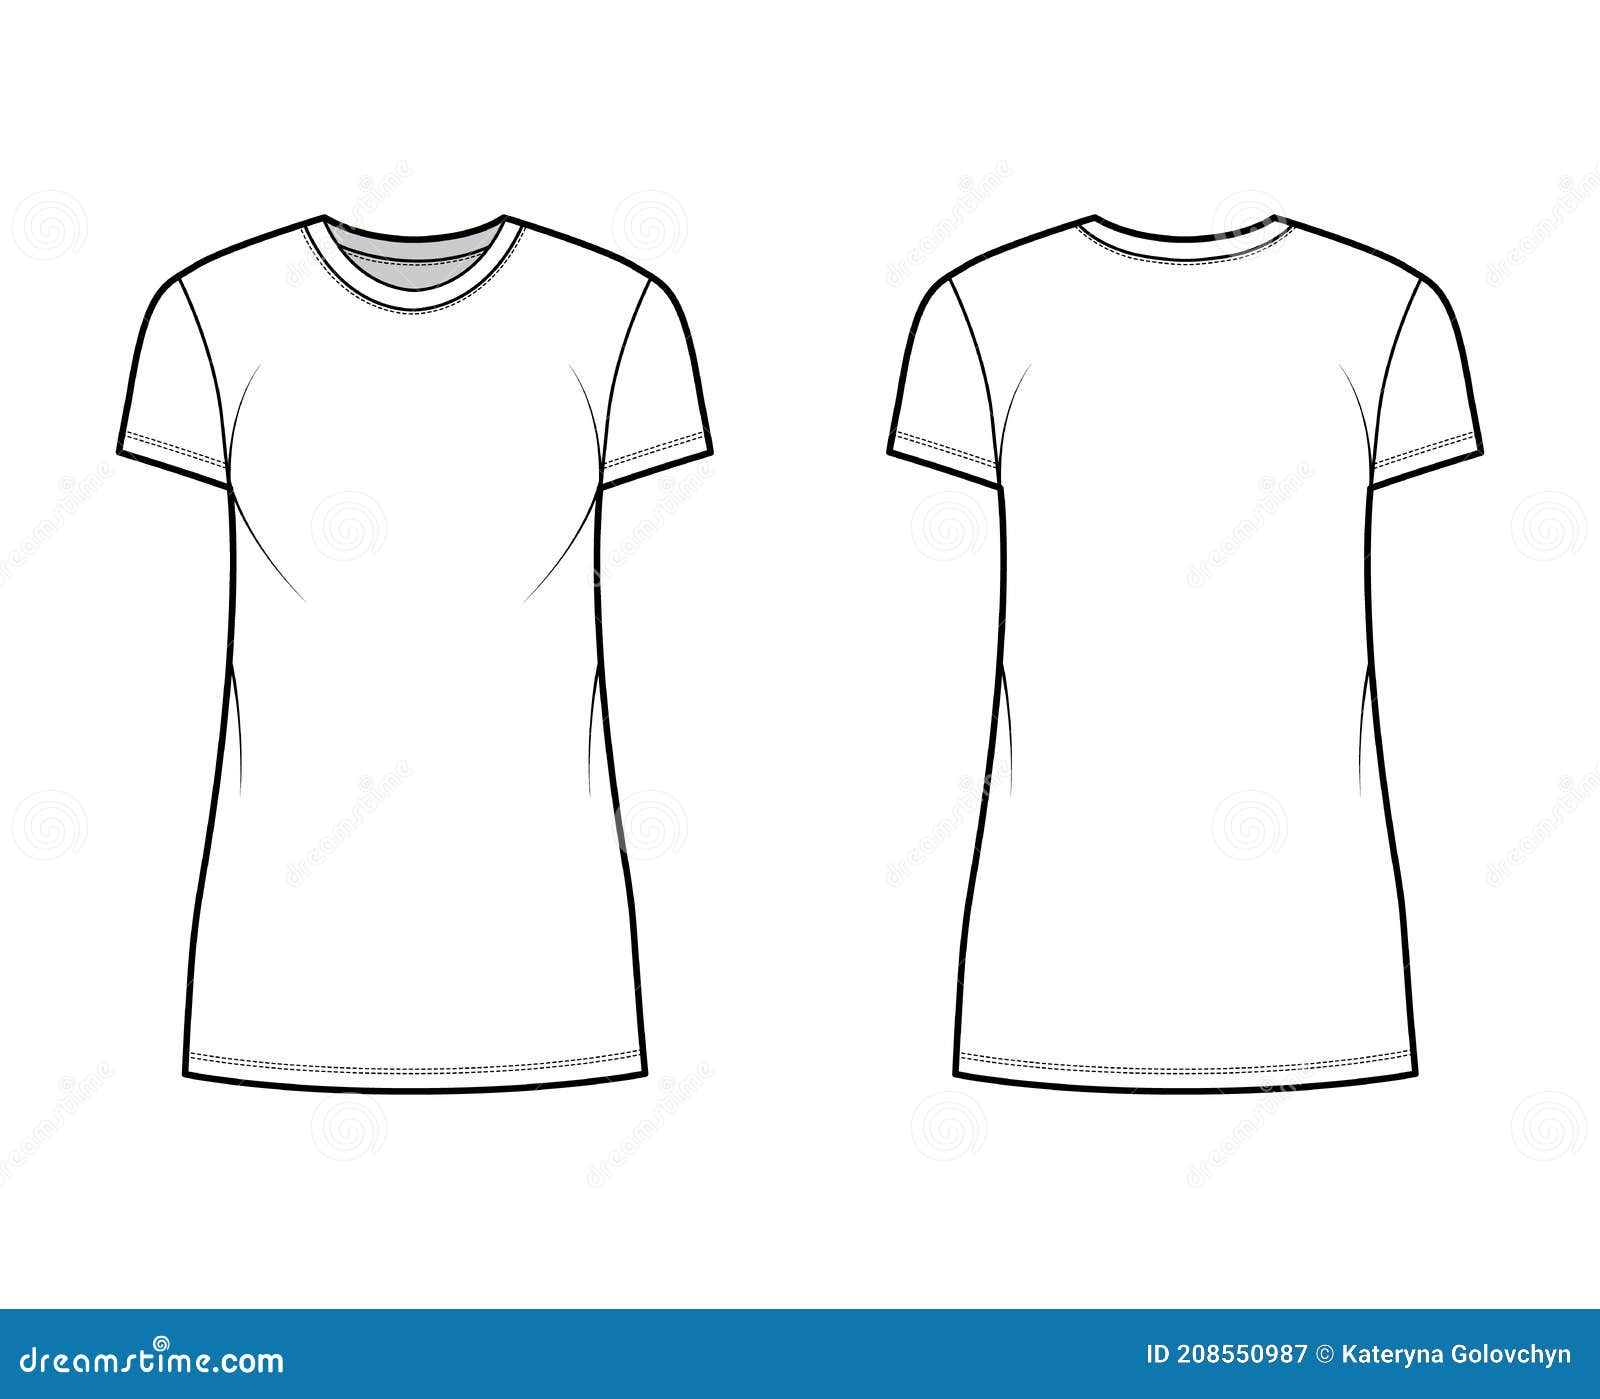 t-shirt dress technical fashion  with crew neck, short sleeves, mini length, oversized, pencil fullness flat